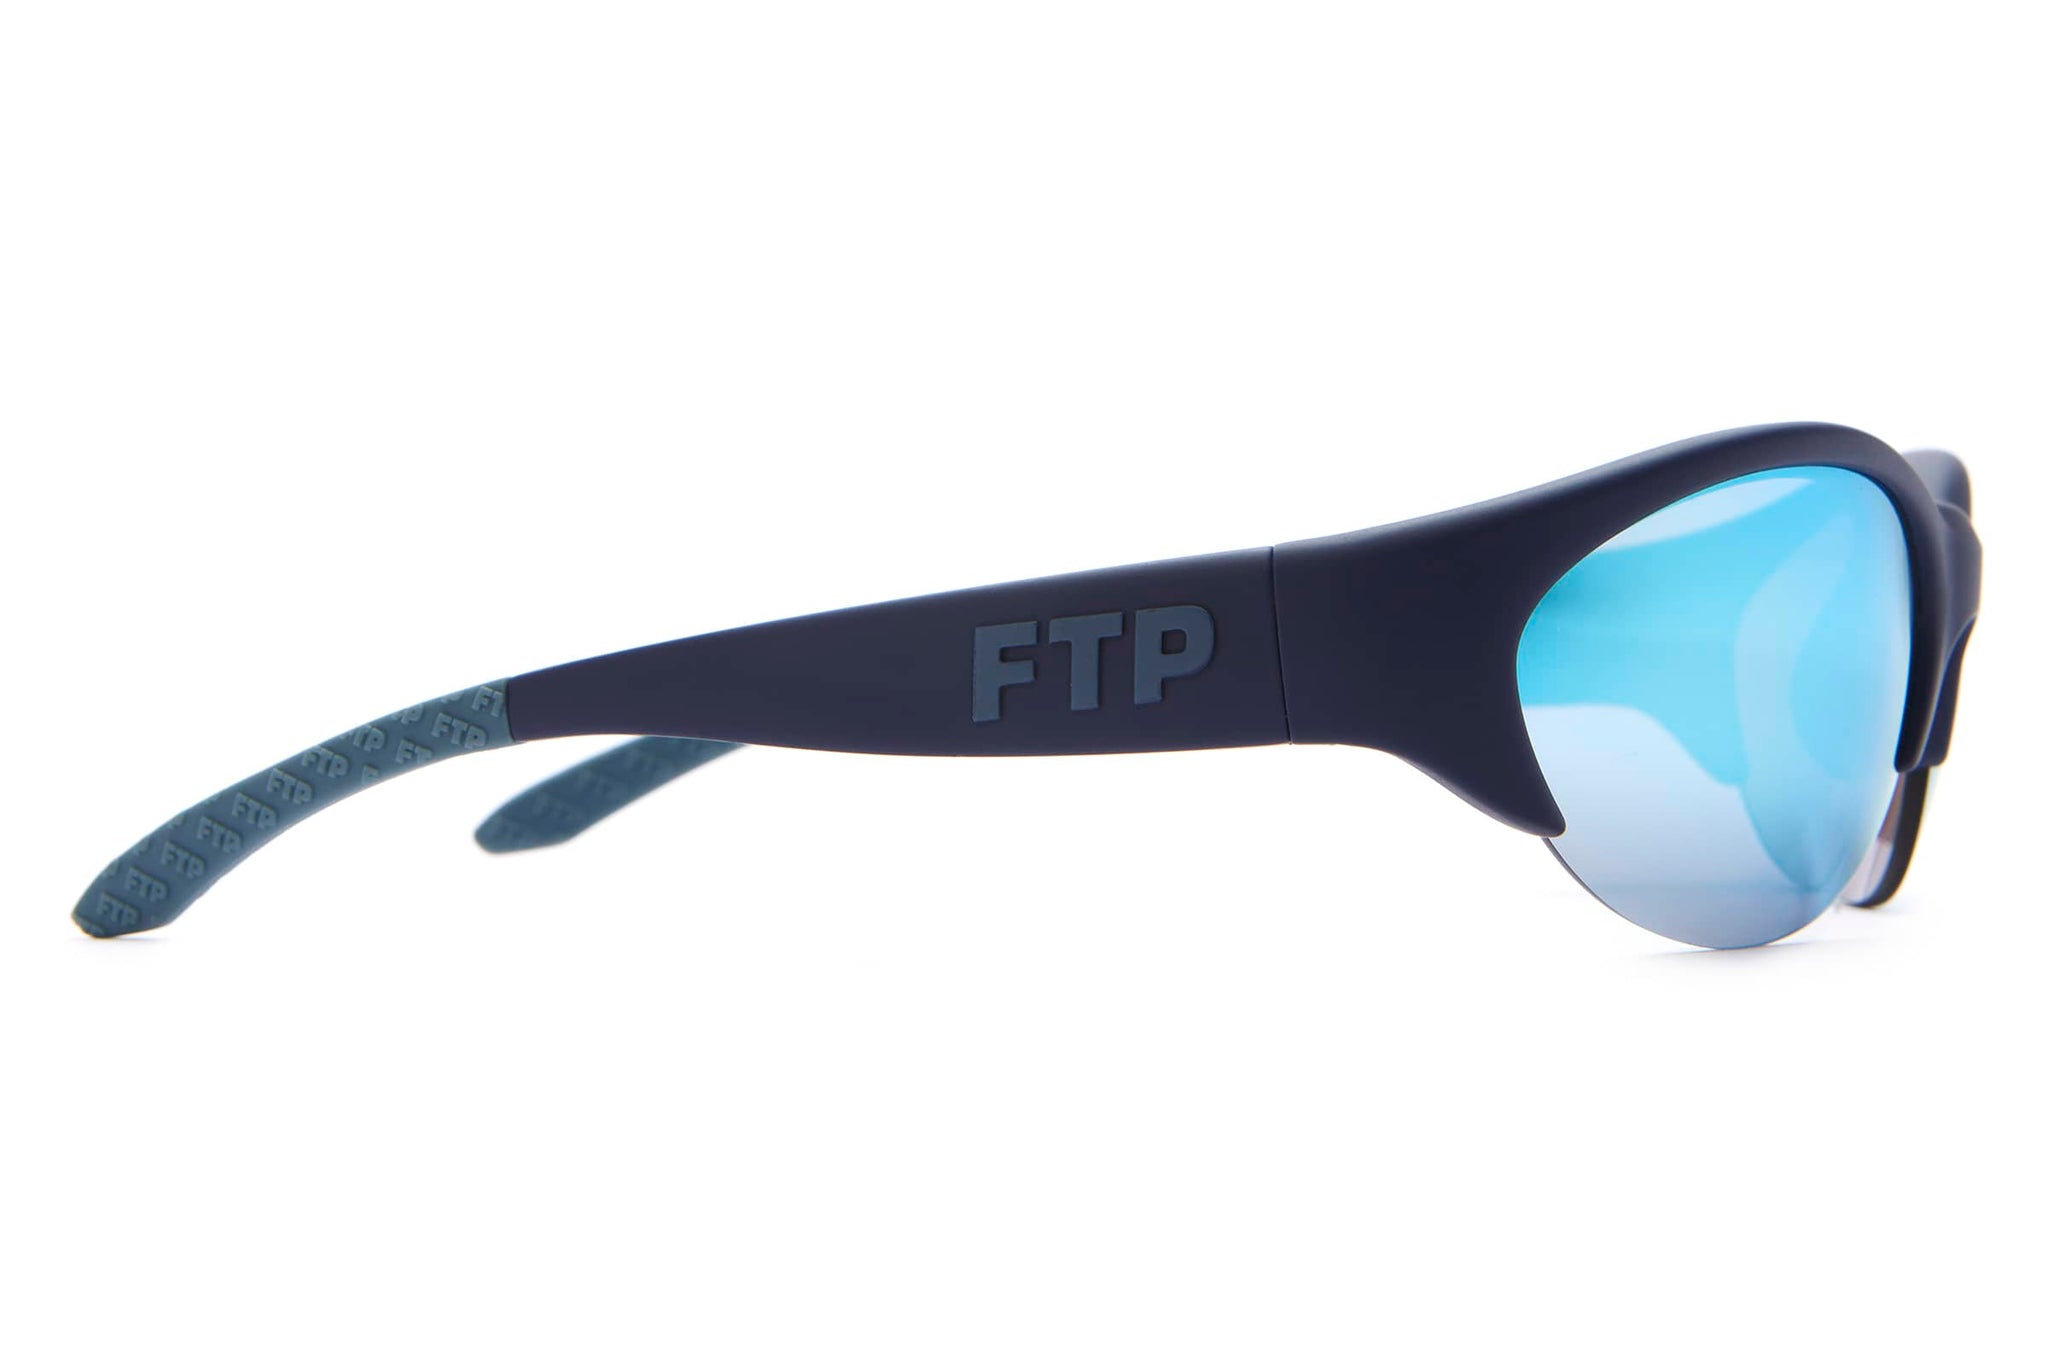 The FTP Sport - Midnight Blue